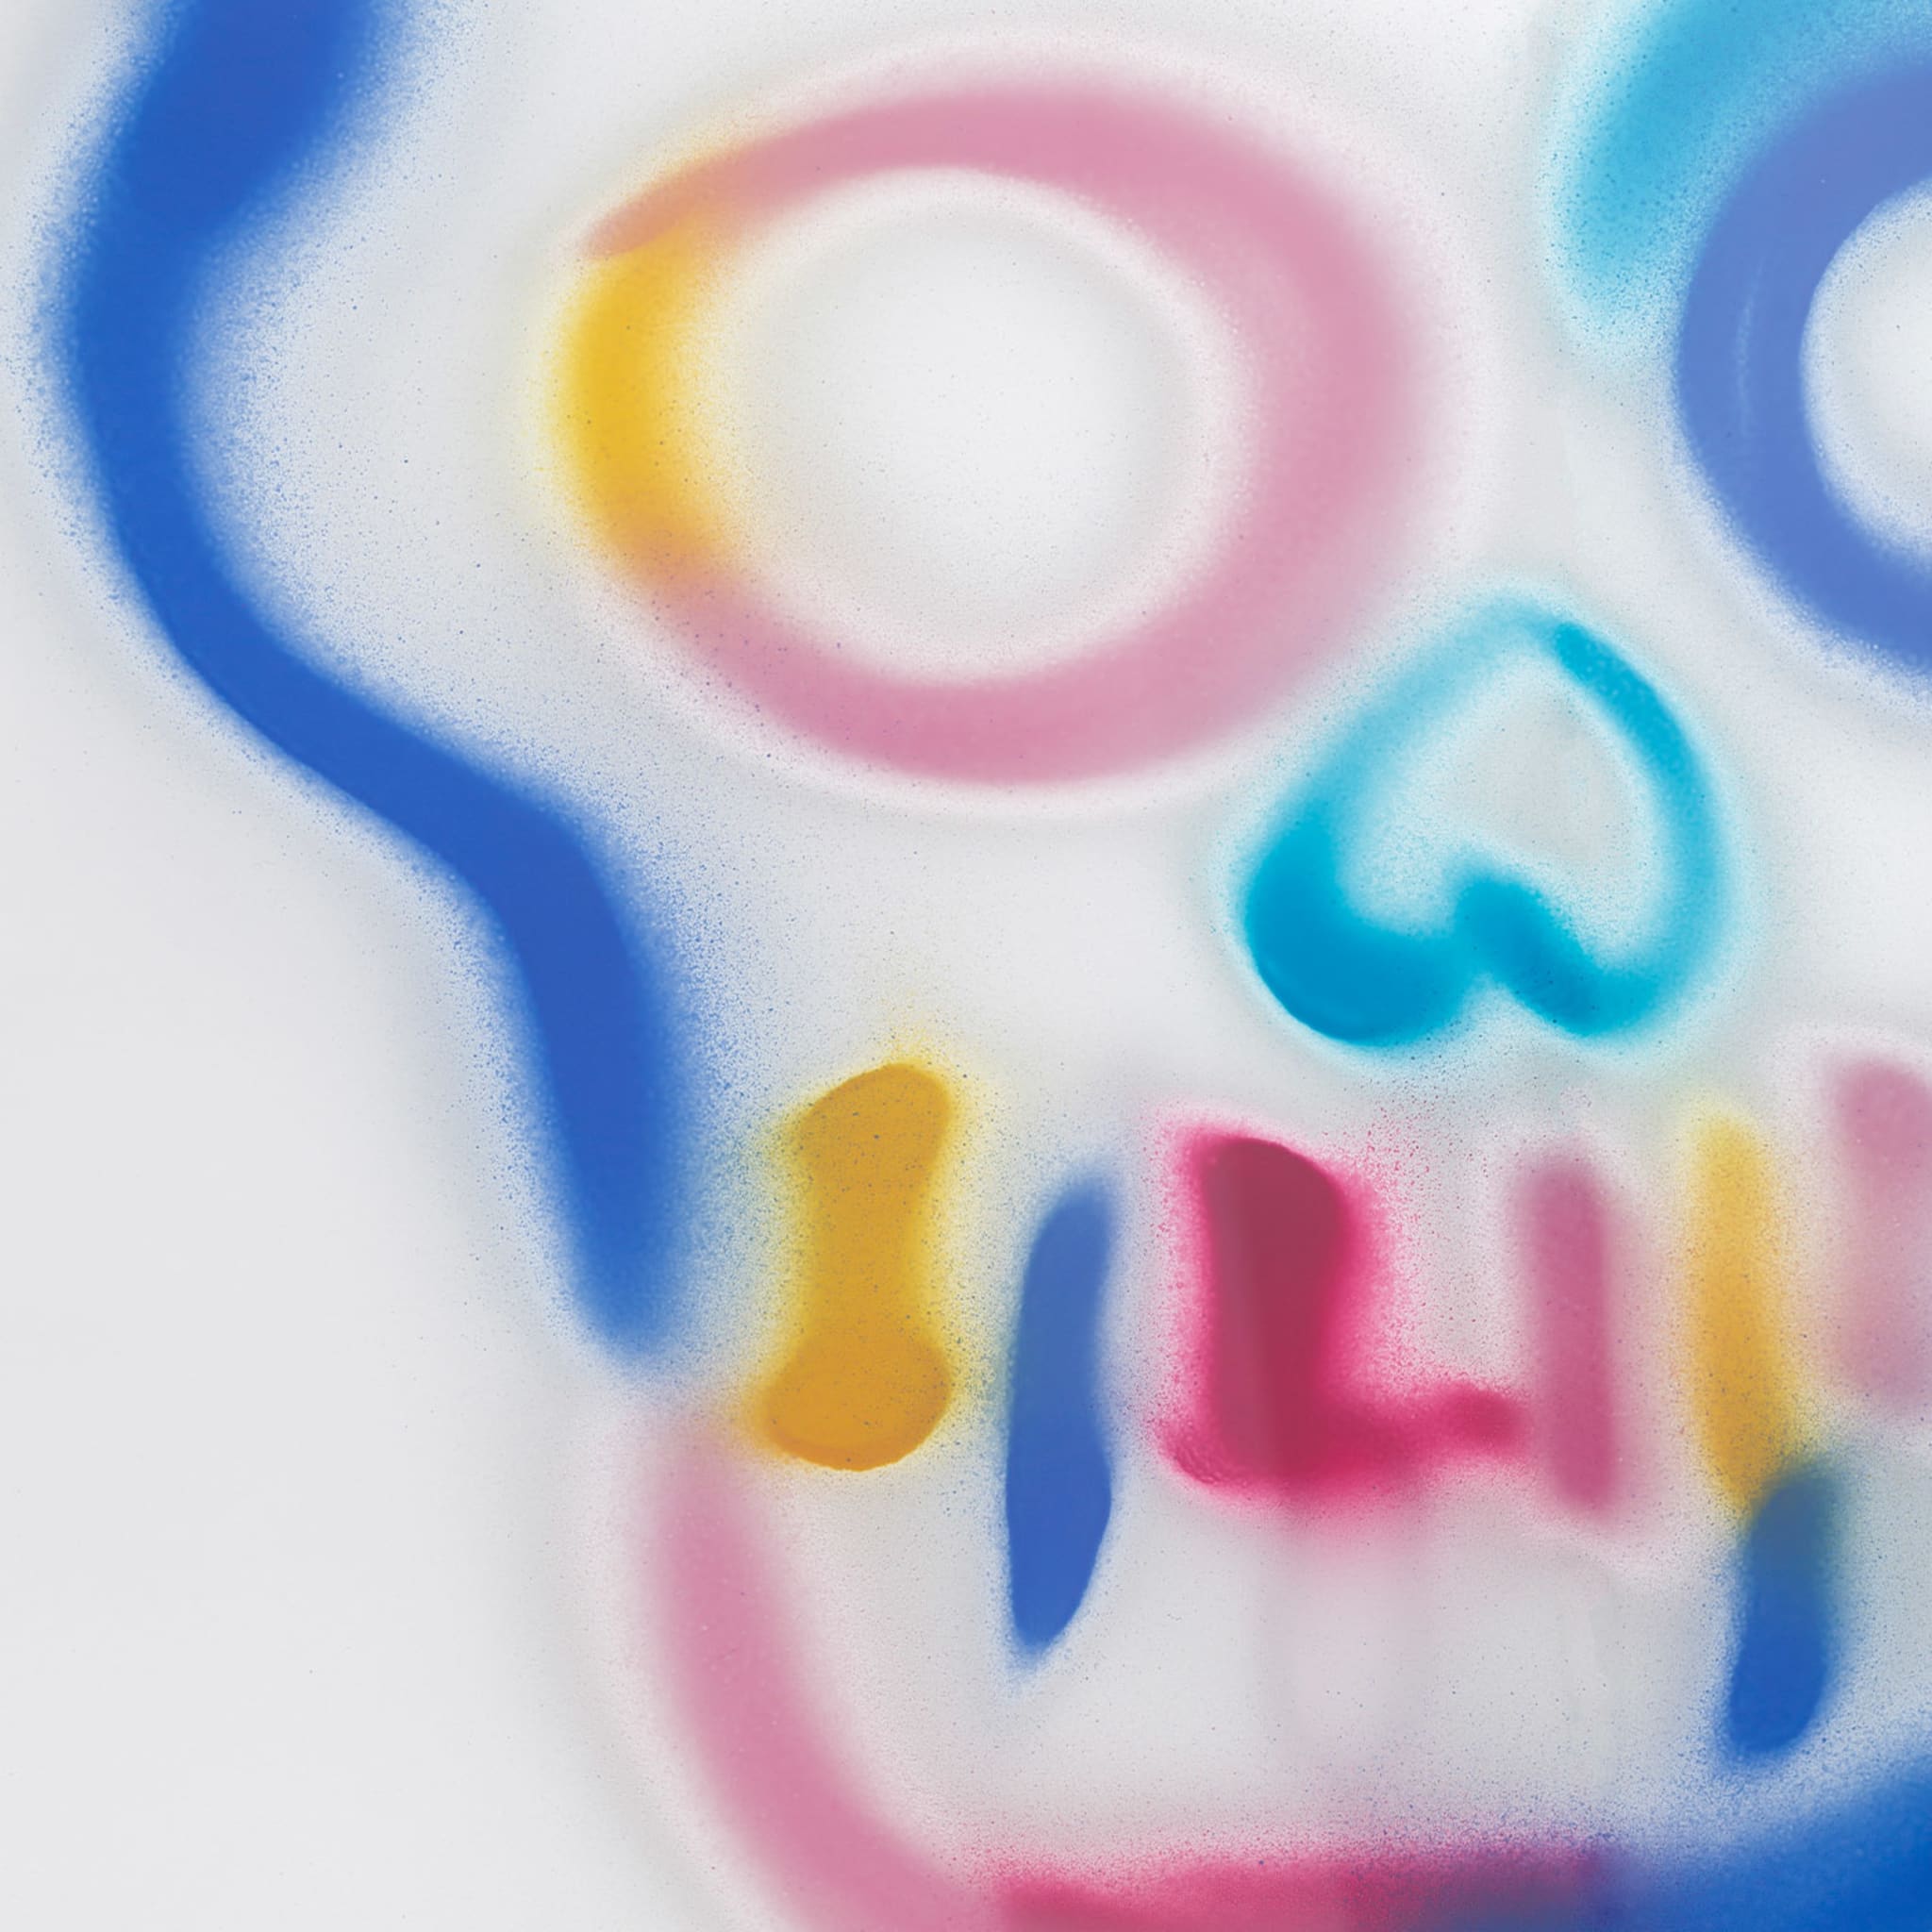 Fun Skull of Colors Mirror #1 by Bradley Theodore - Alternative view 1